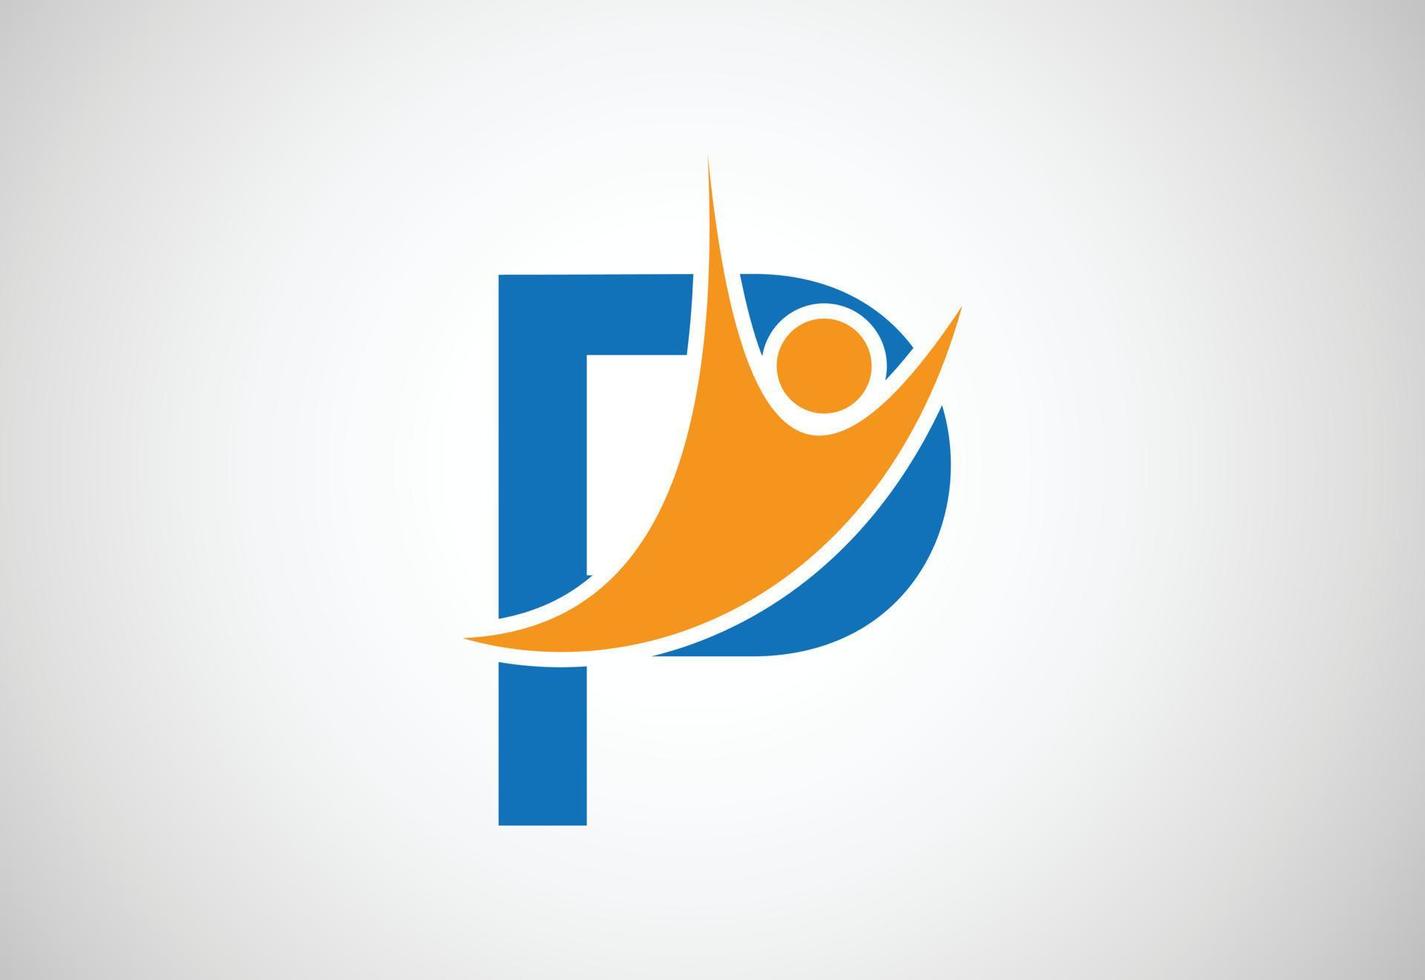 Letter P logo design template, Vector illustration